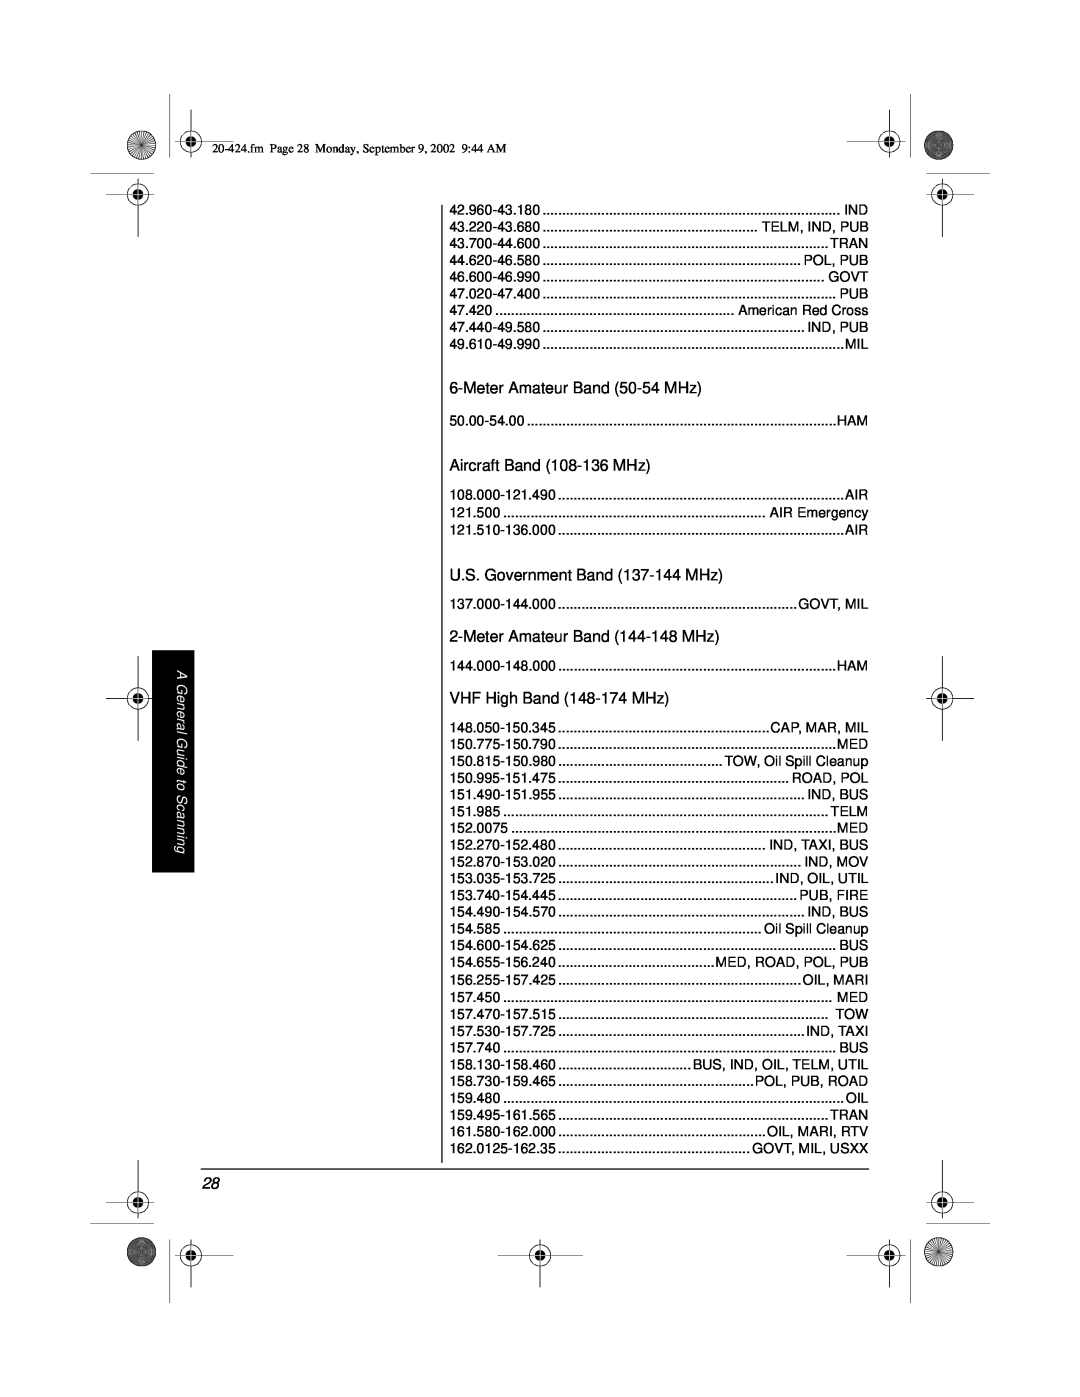 Radio Shack PRO-2018 manual Meter Amateur Band 50-54 MHz, Aircraft Band 108-136 MHz, U.S. Government Band 137-144 MHz 